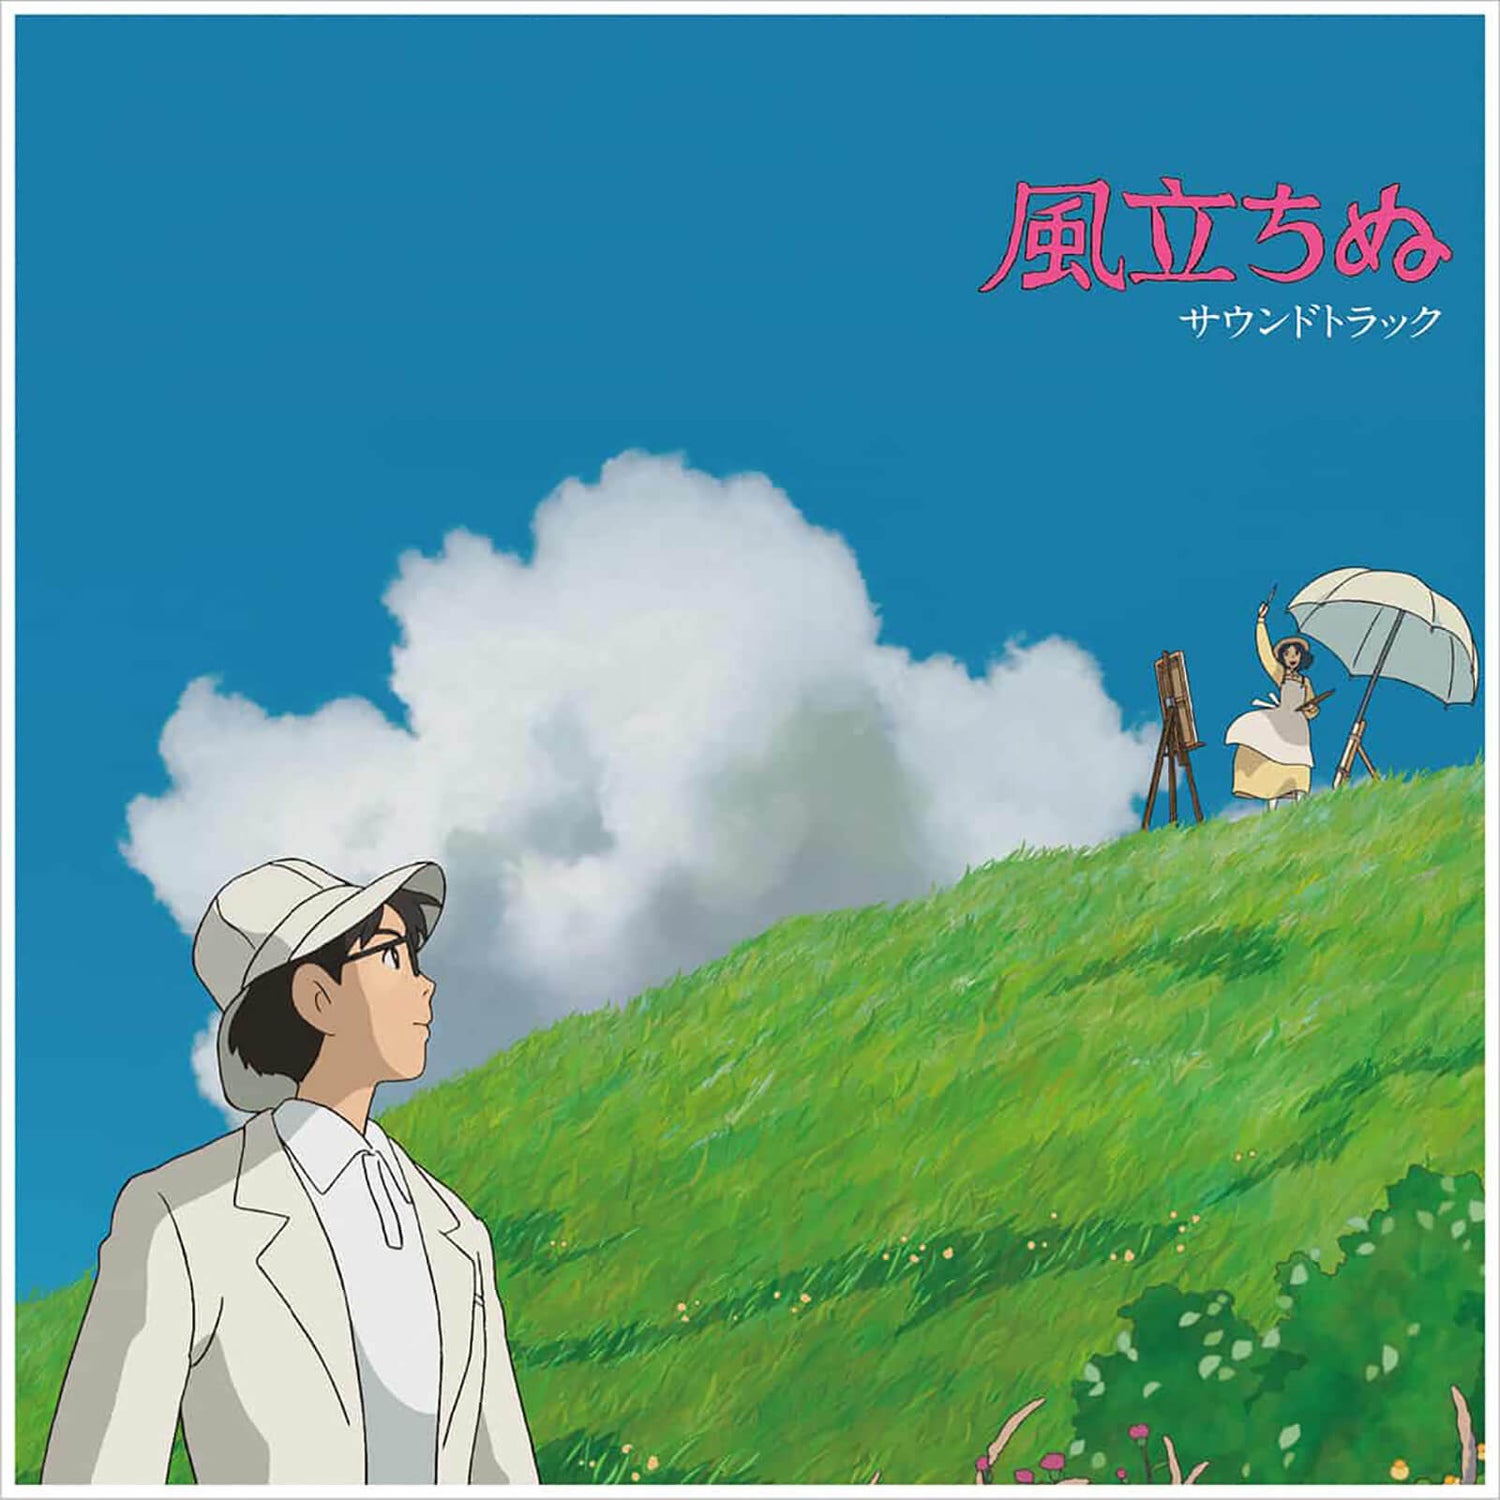 Studio Ghibli Records - The Wind Rises: Soundtrack Vinyl 2LP